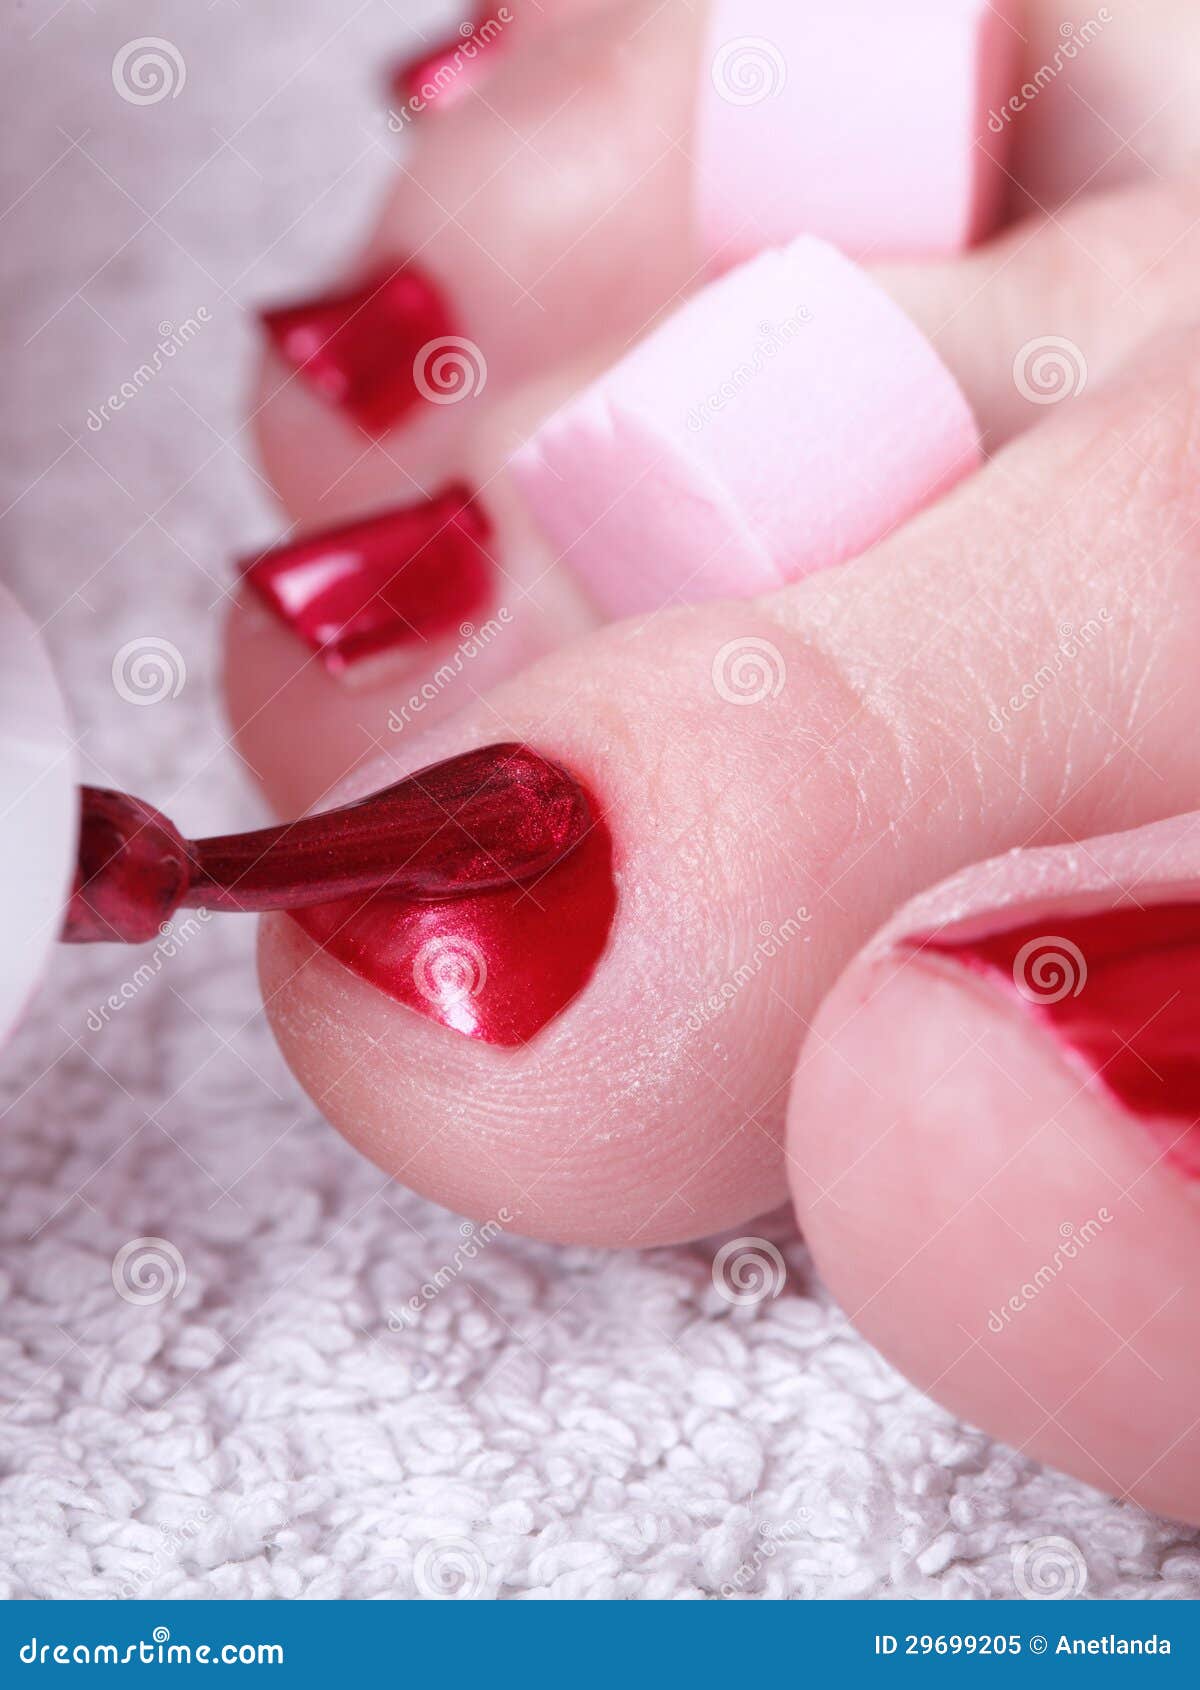 Female Feet Red Polished Nails Stock Image - Image of female, comfort ...